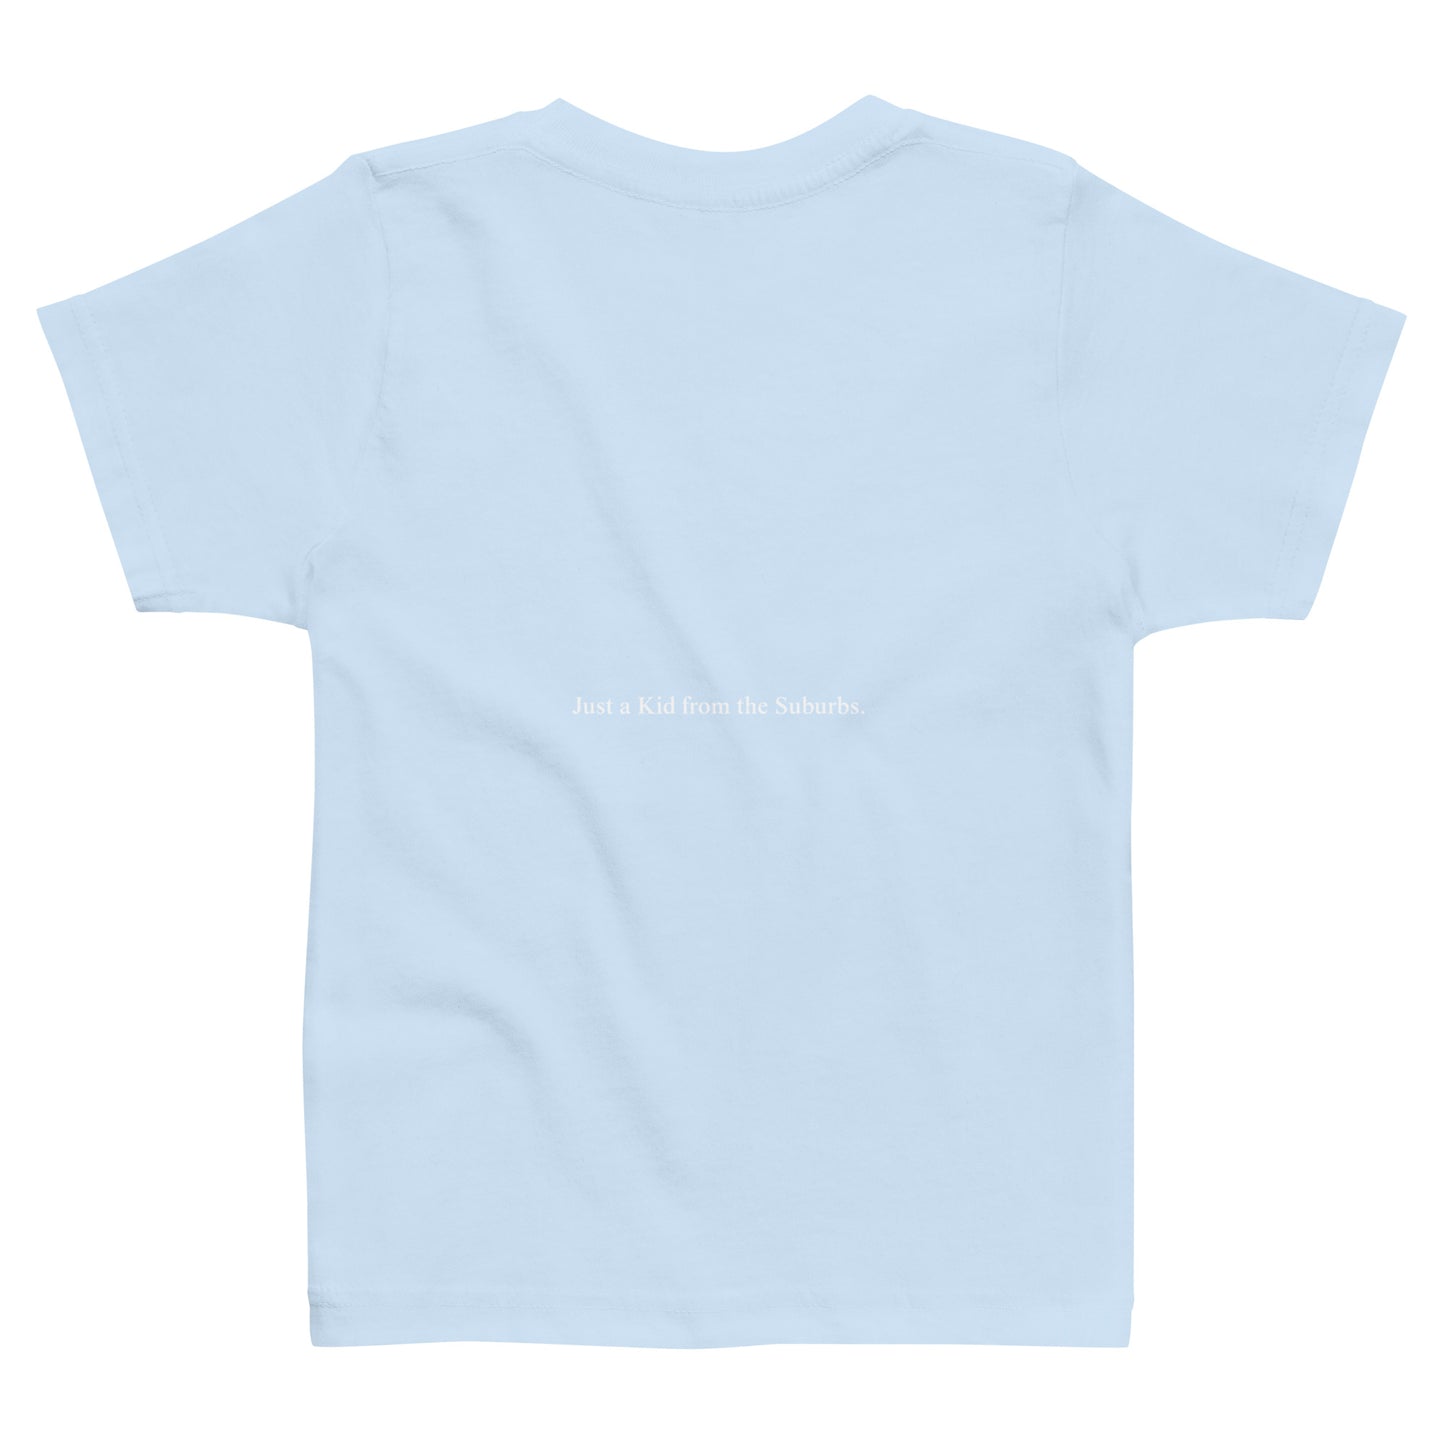 Suburban Kid Classic T-Shirt (Toddler)